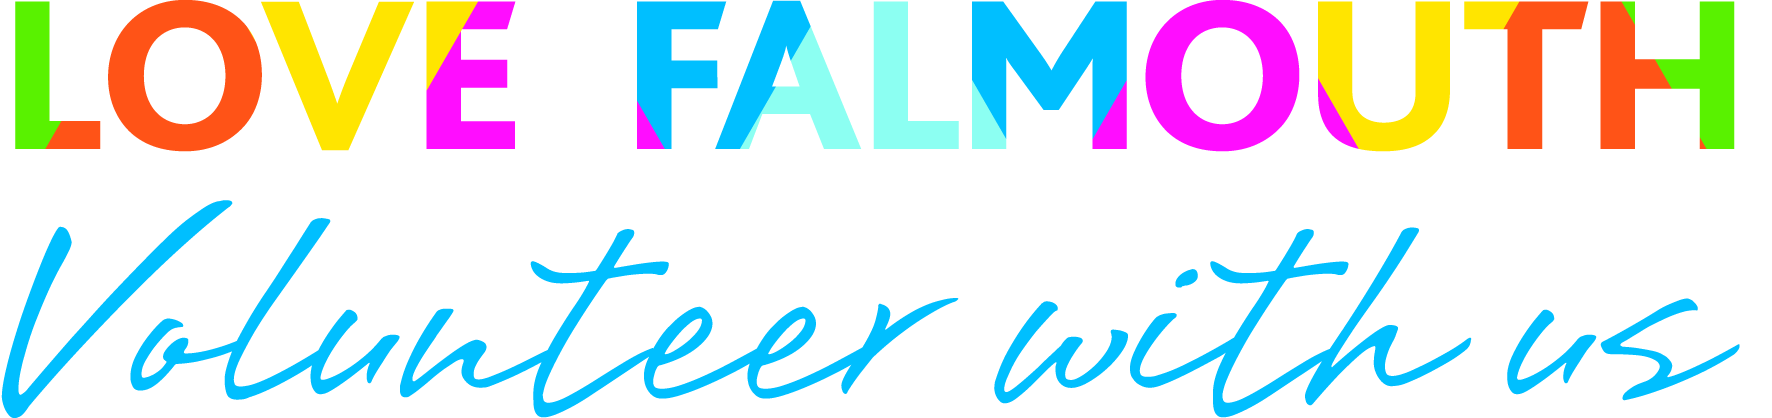 Love Falmouth: Volunteer Makers Logo